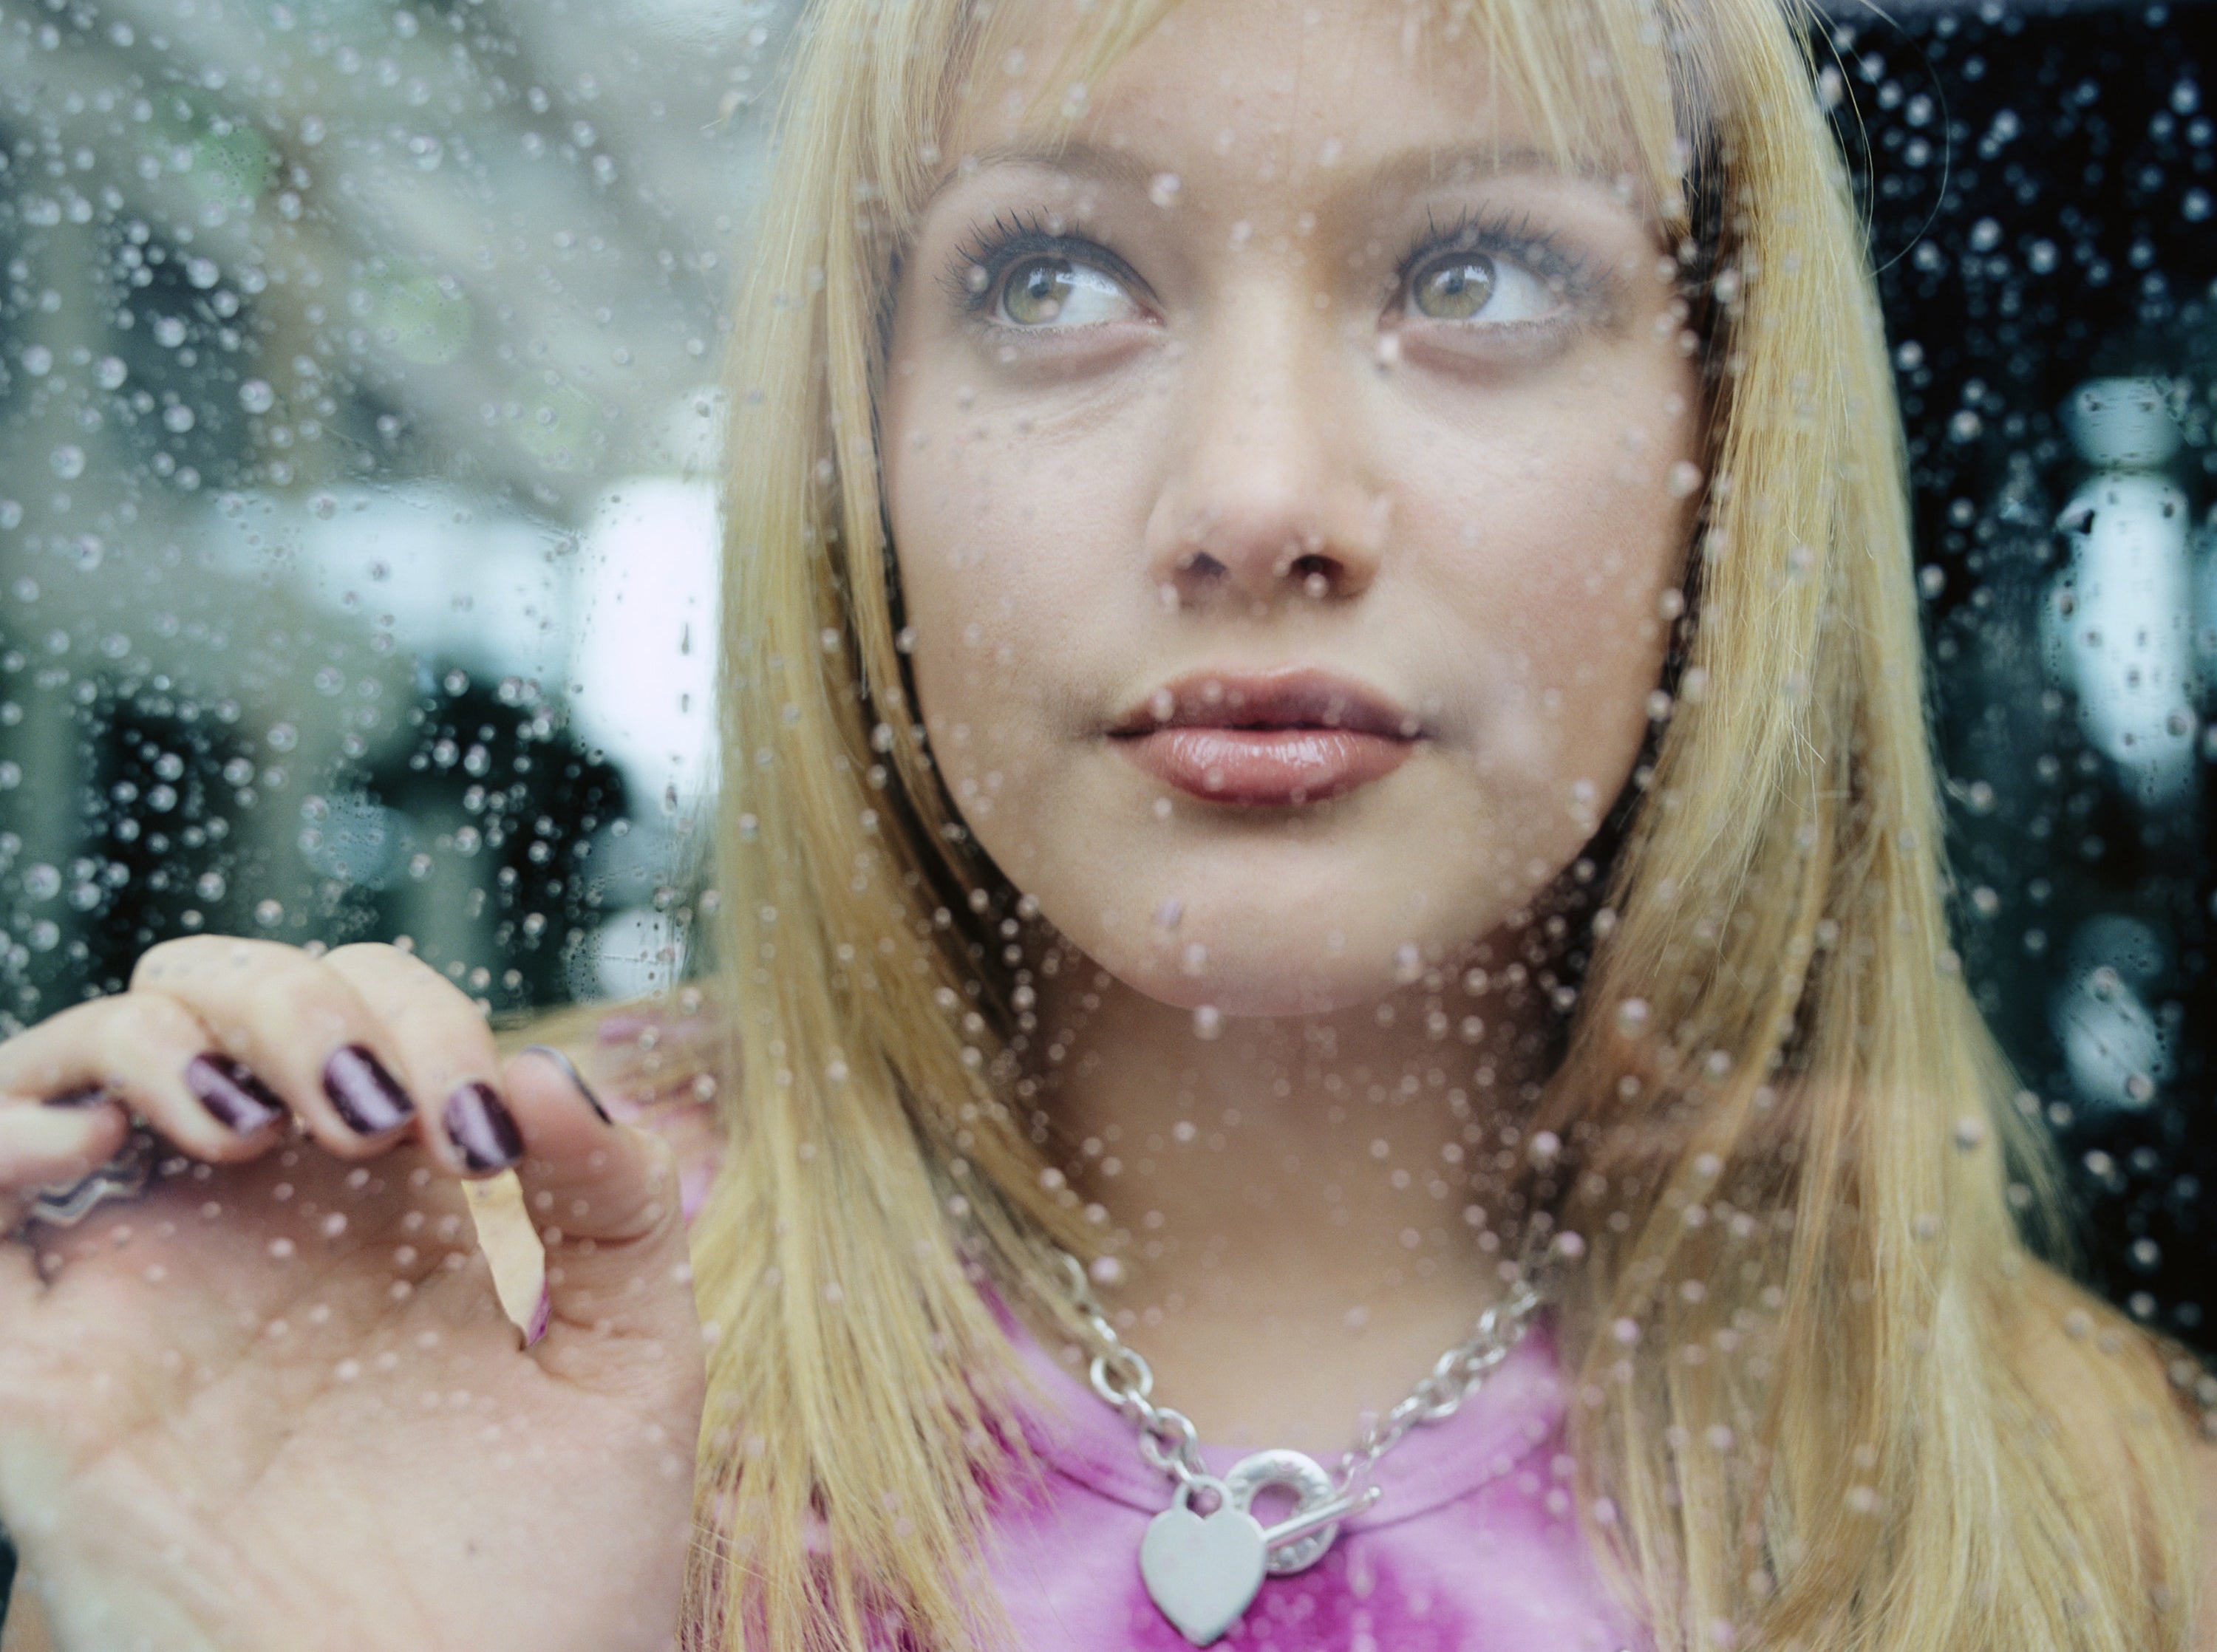 Hilary Duff looks out a rain-covered window